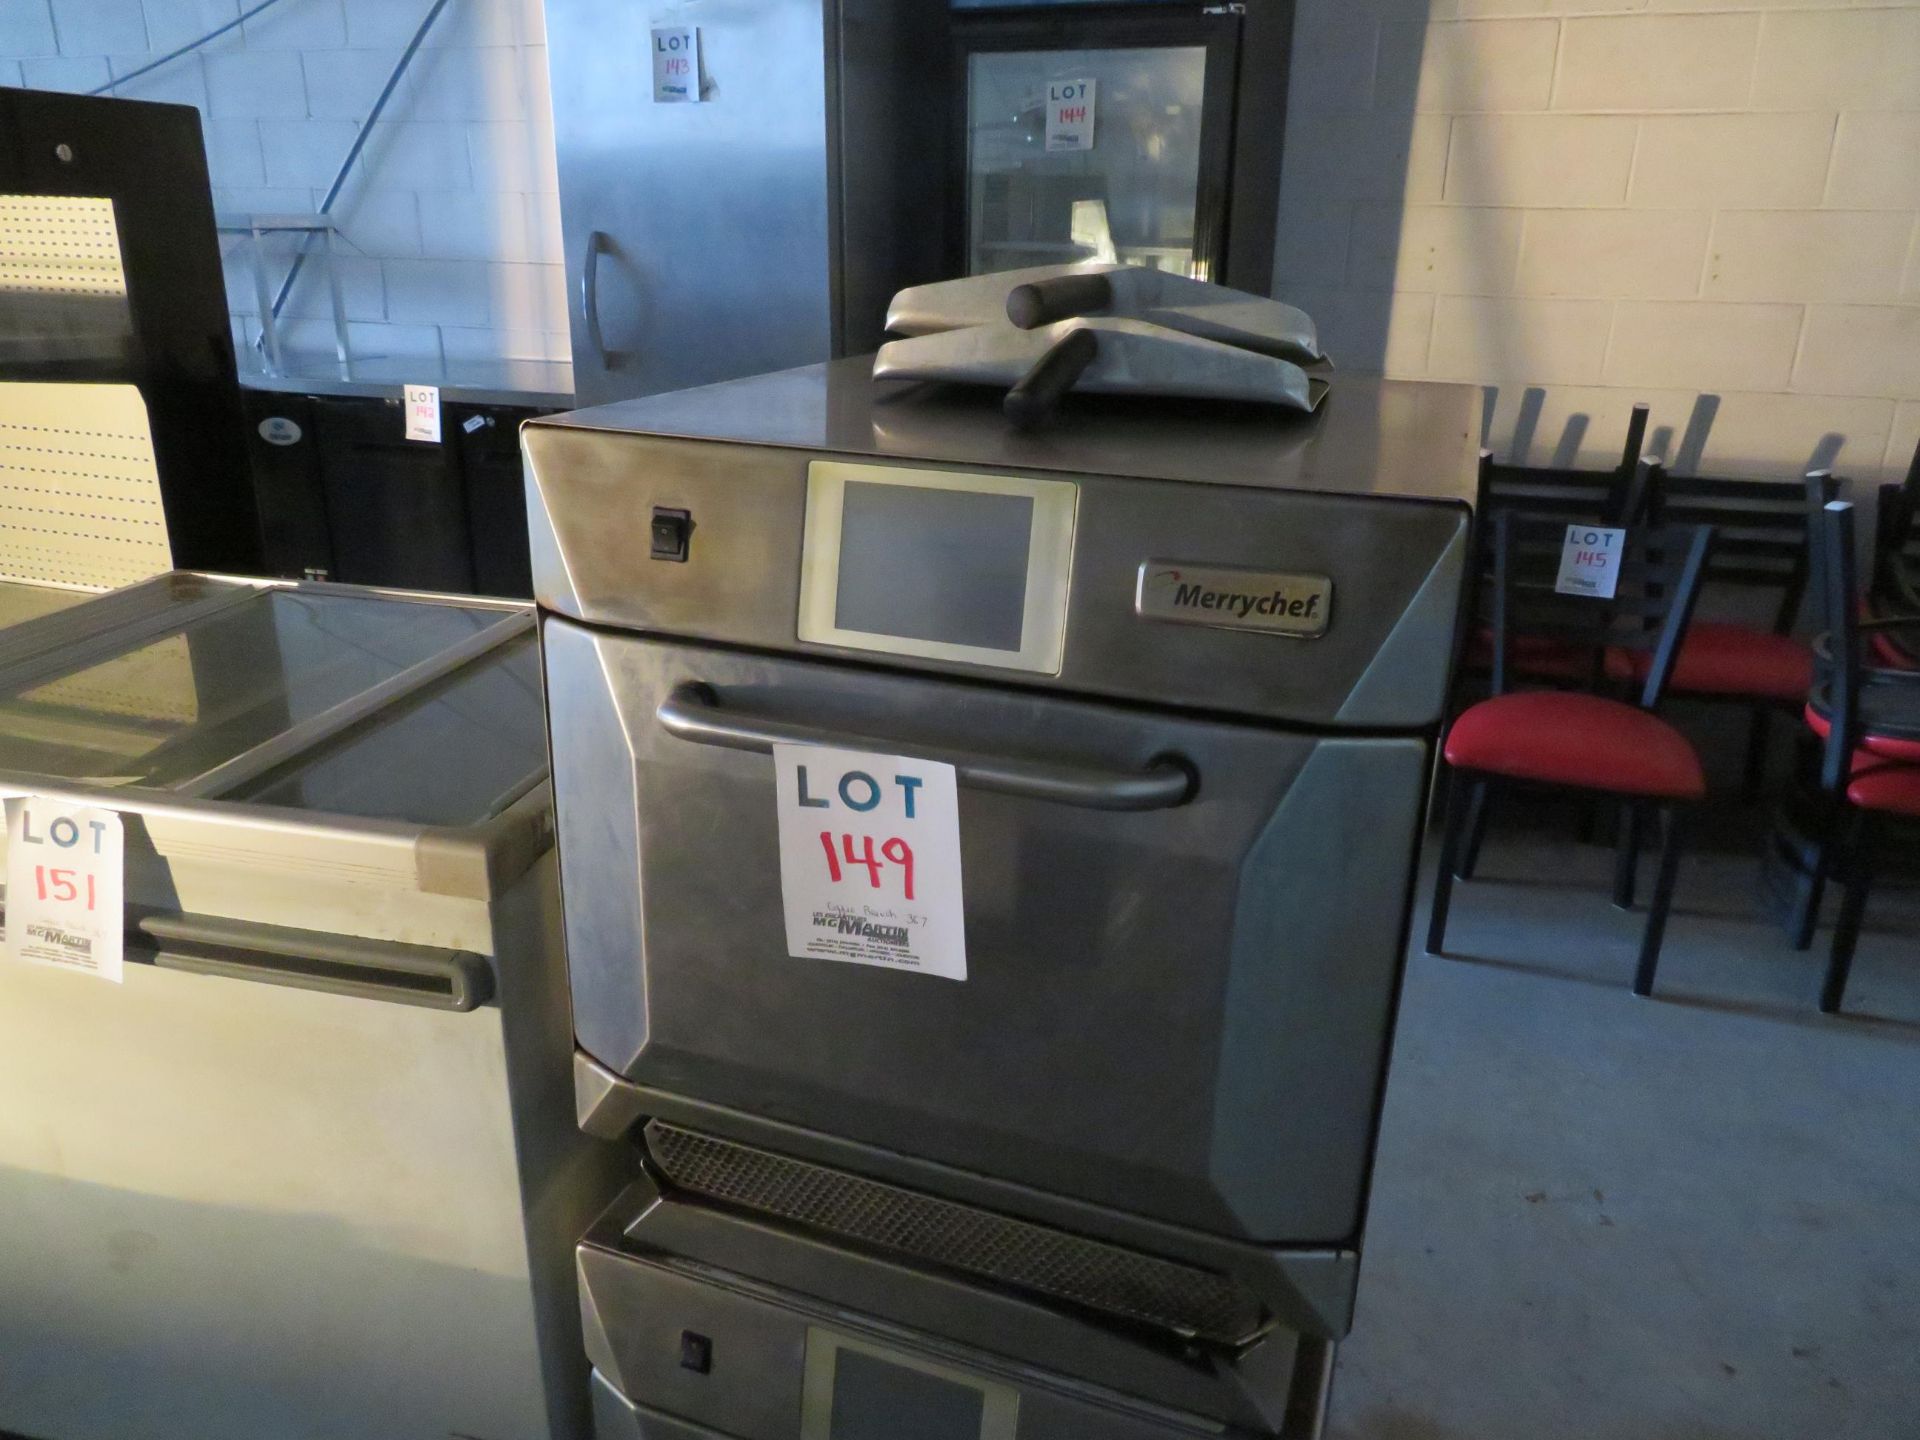 MERRYCHEF oven, Mod # EIKON E4S, approx. 23"w x 23"d x 23"h